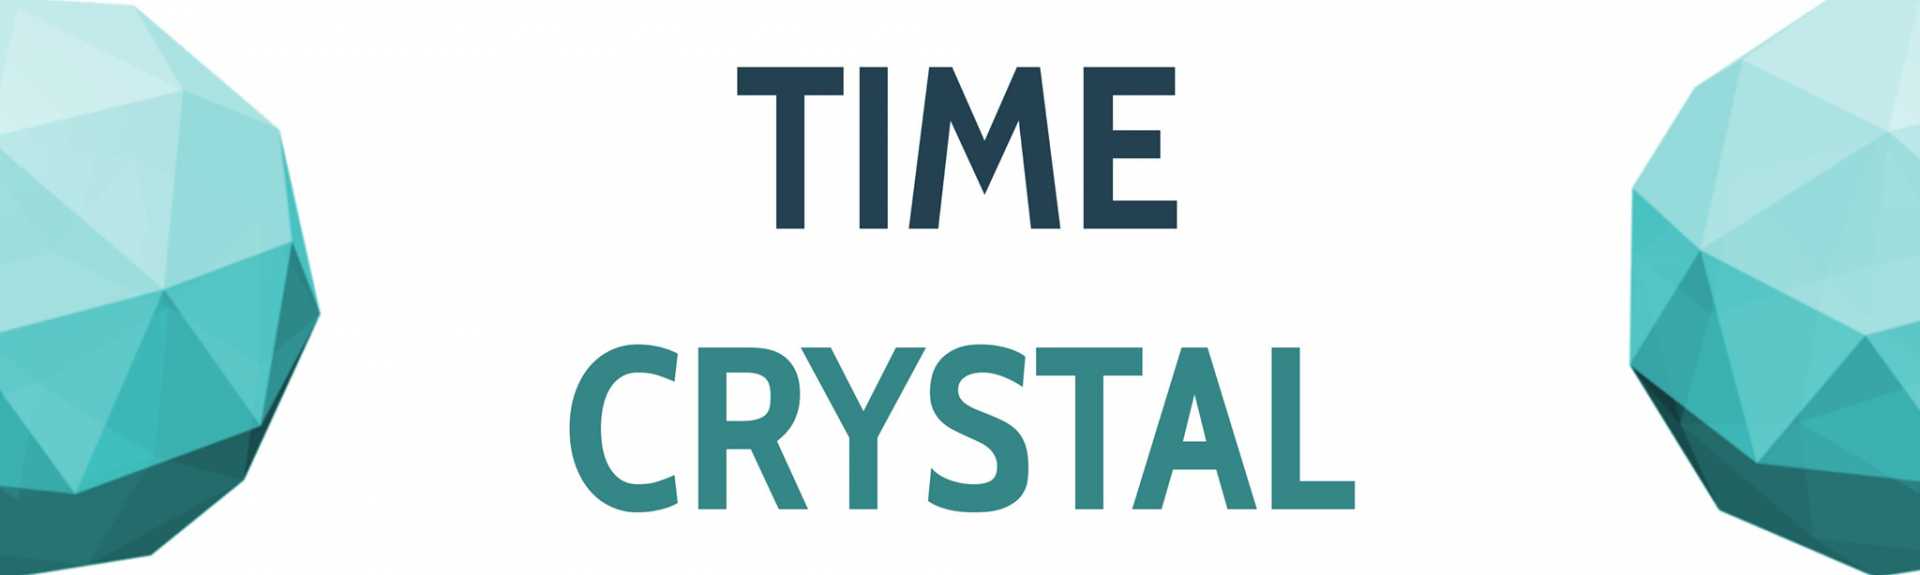 Time Crystal